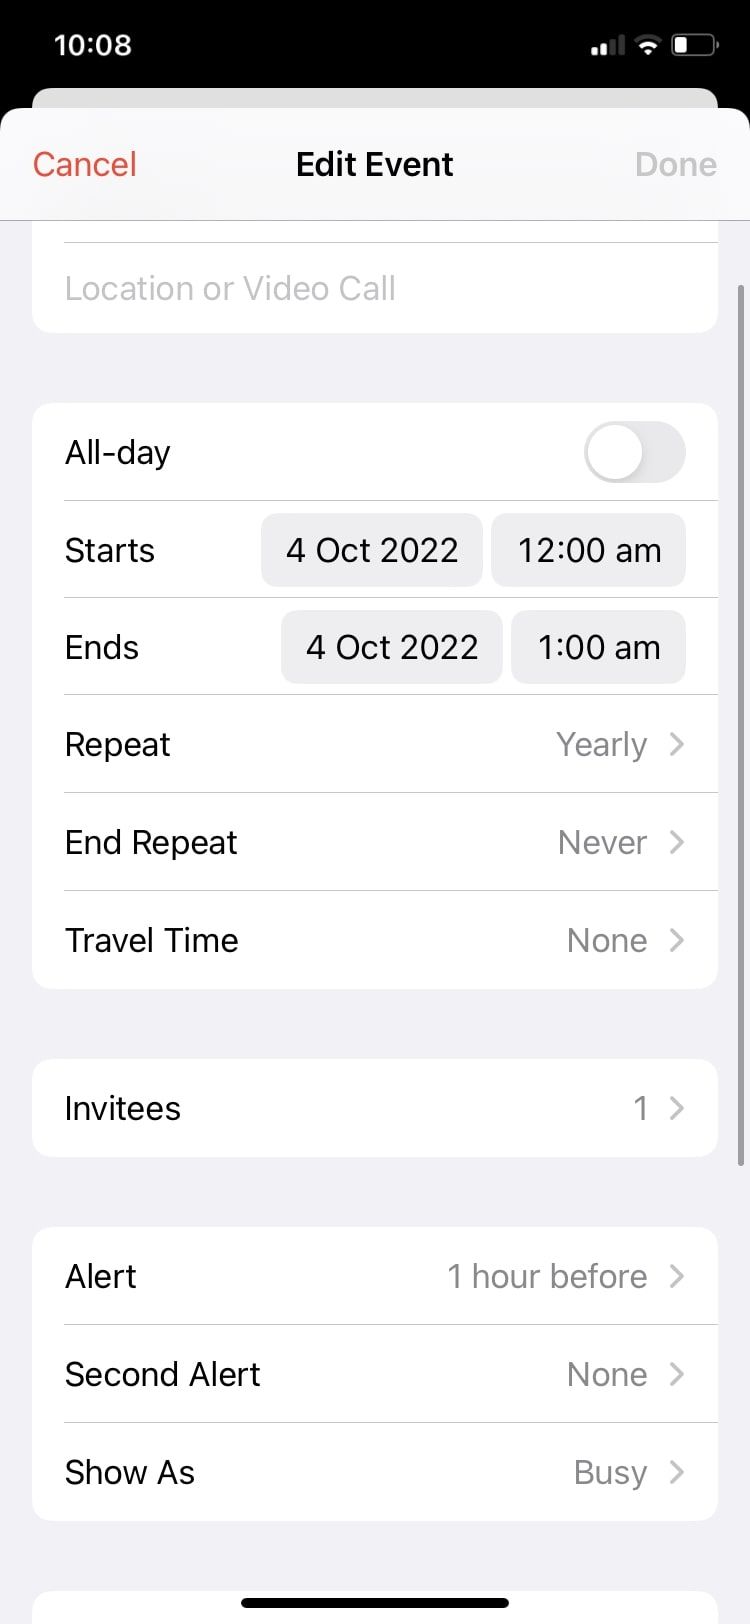 edit event details in the Calendar app